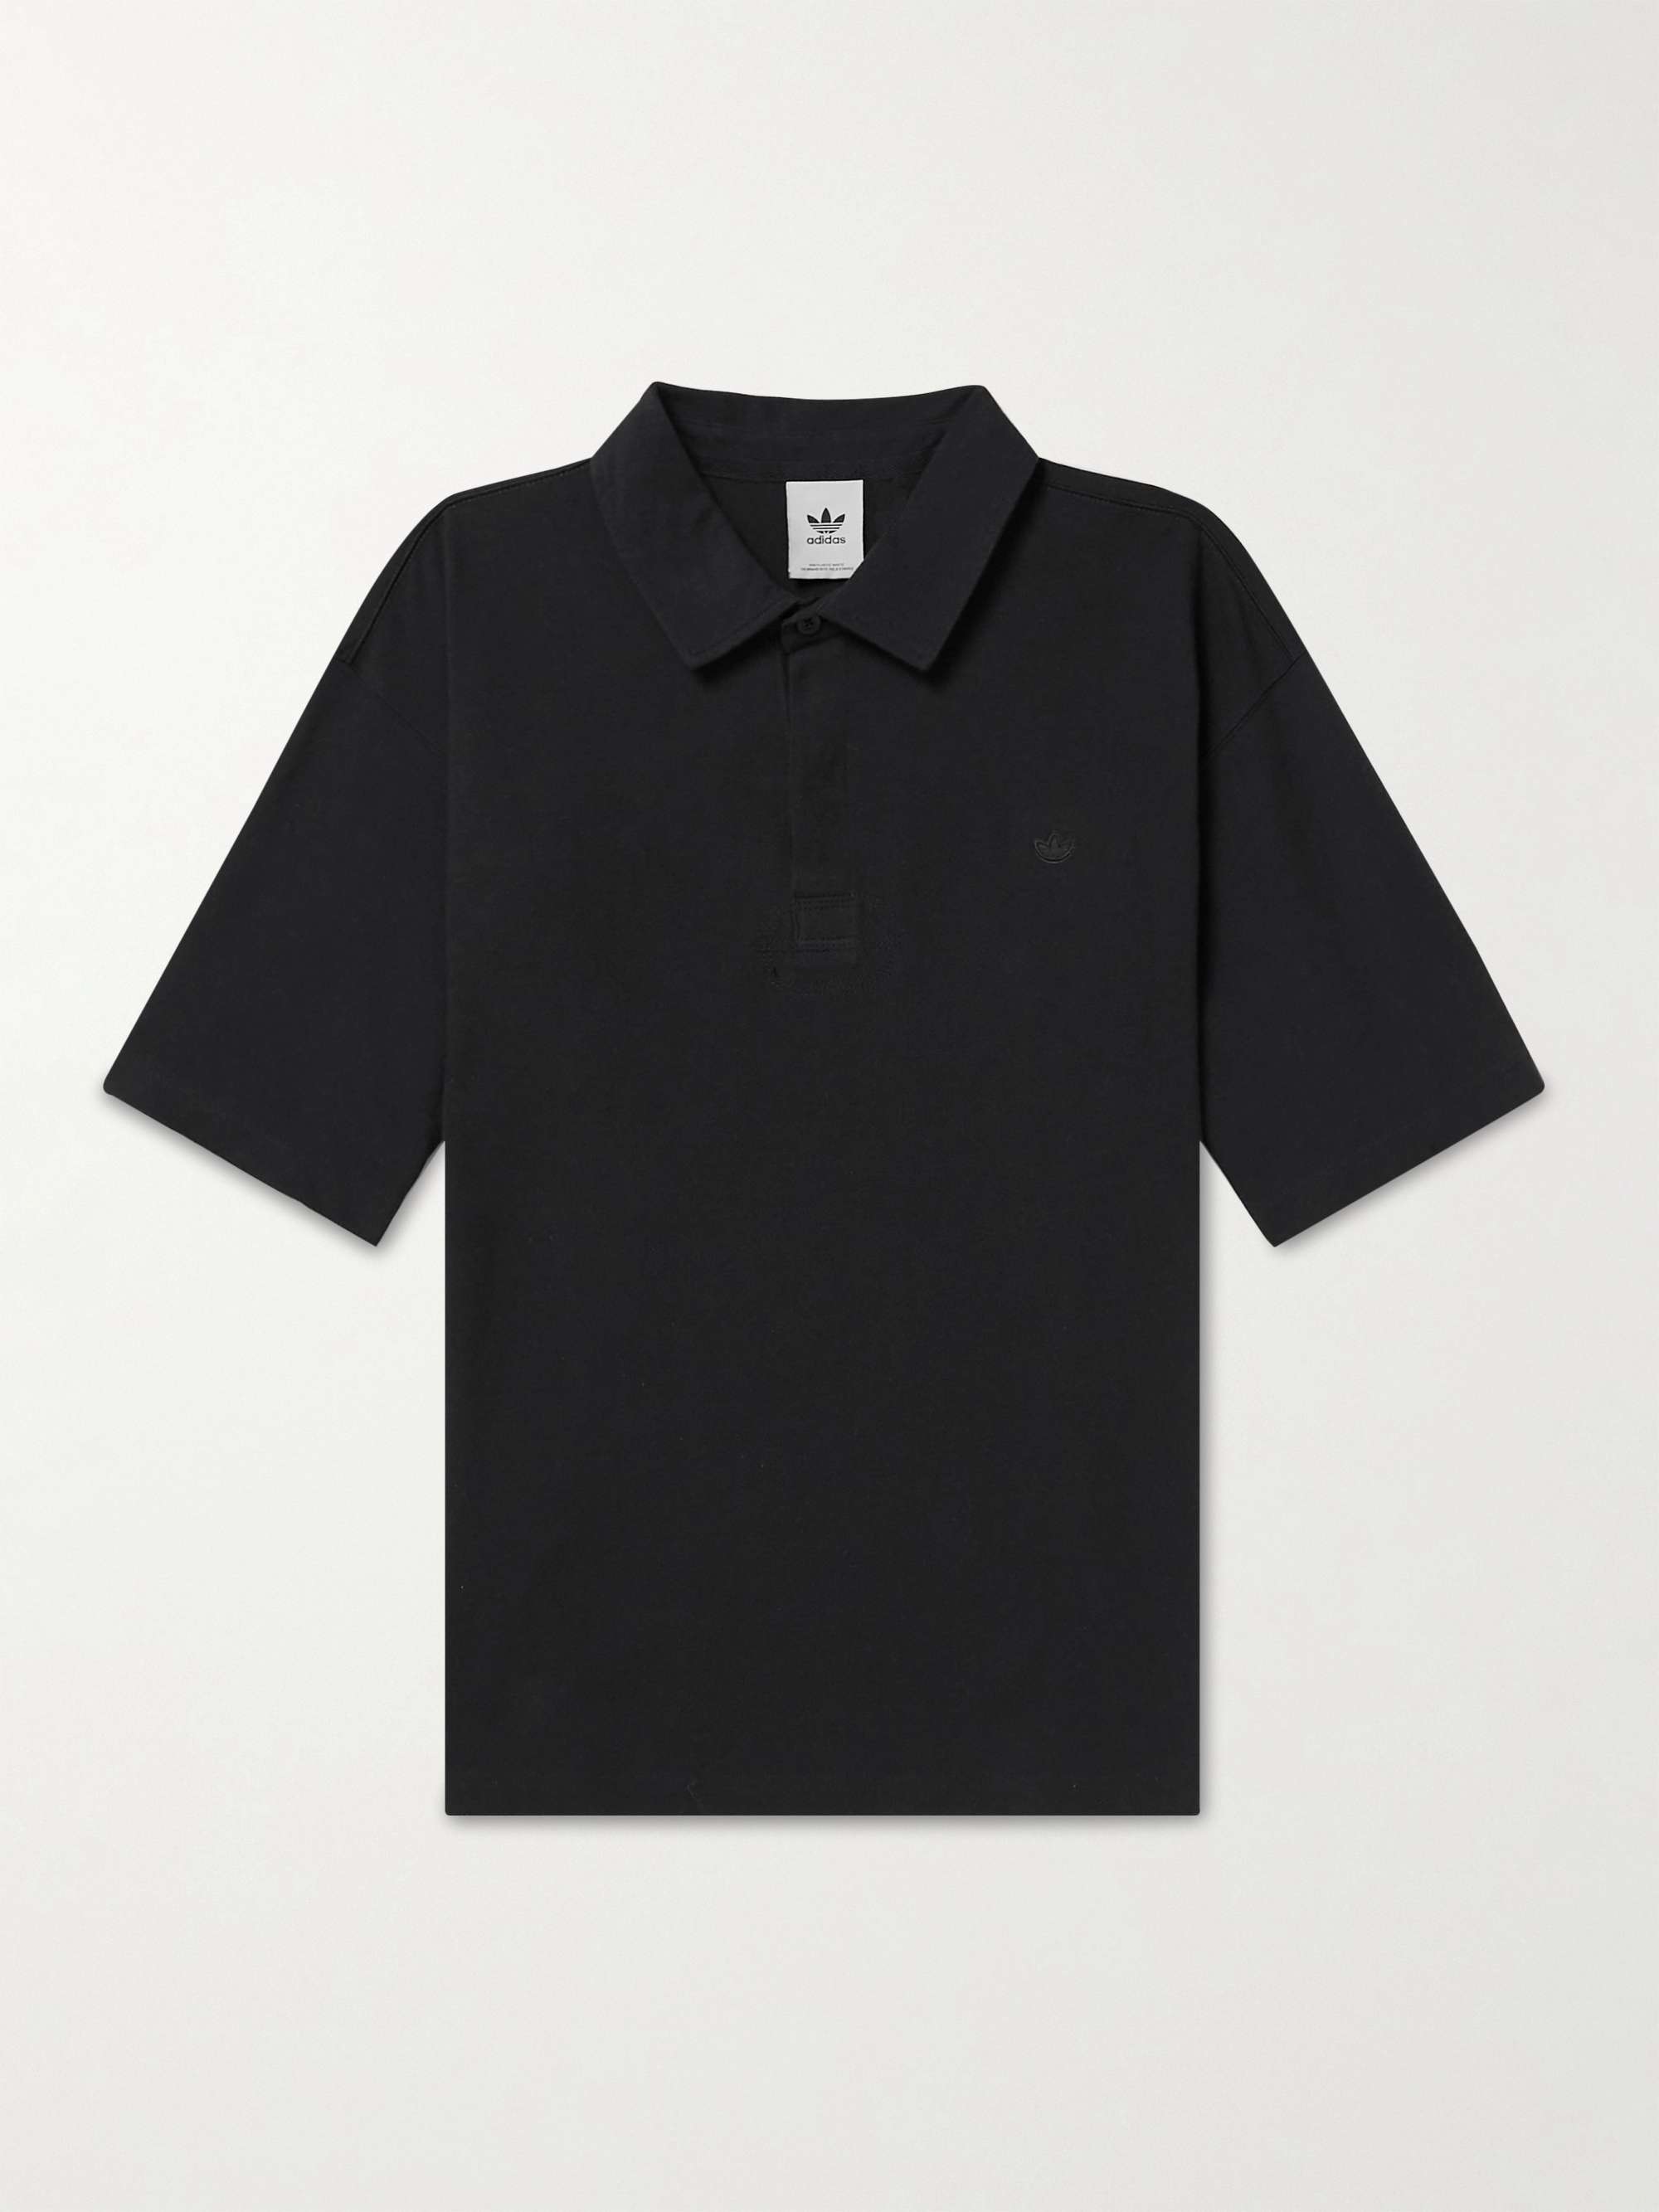 ADIDAS ORIGINALS Logo-Emboidered Cotton-Pique Polo Shirt | MR PORTER